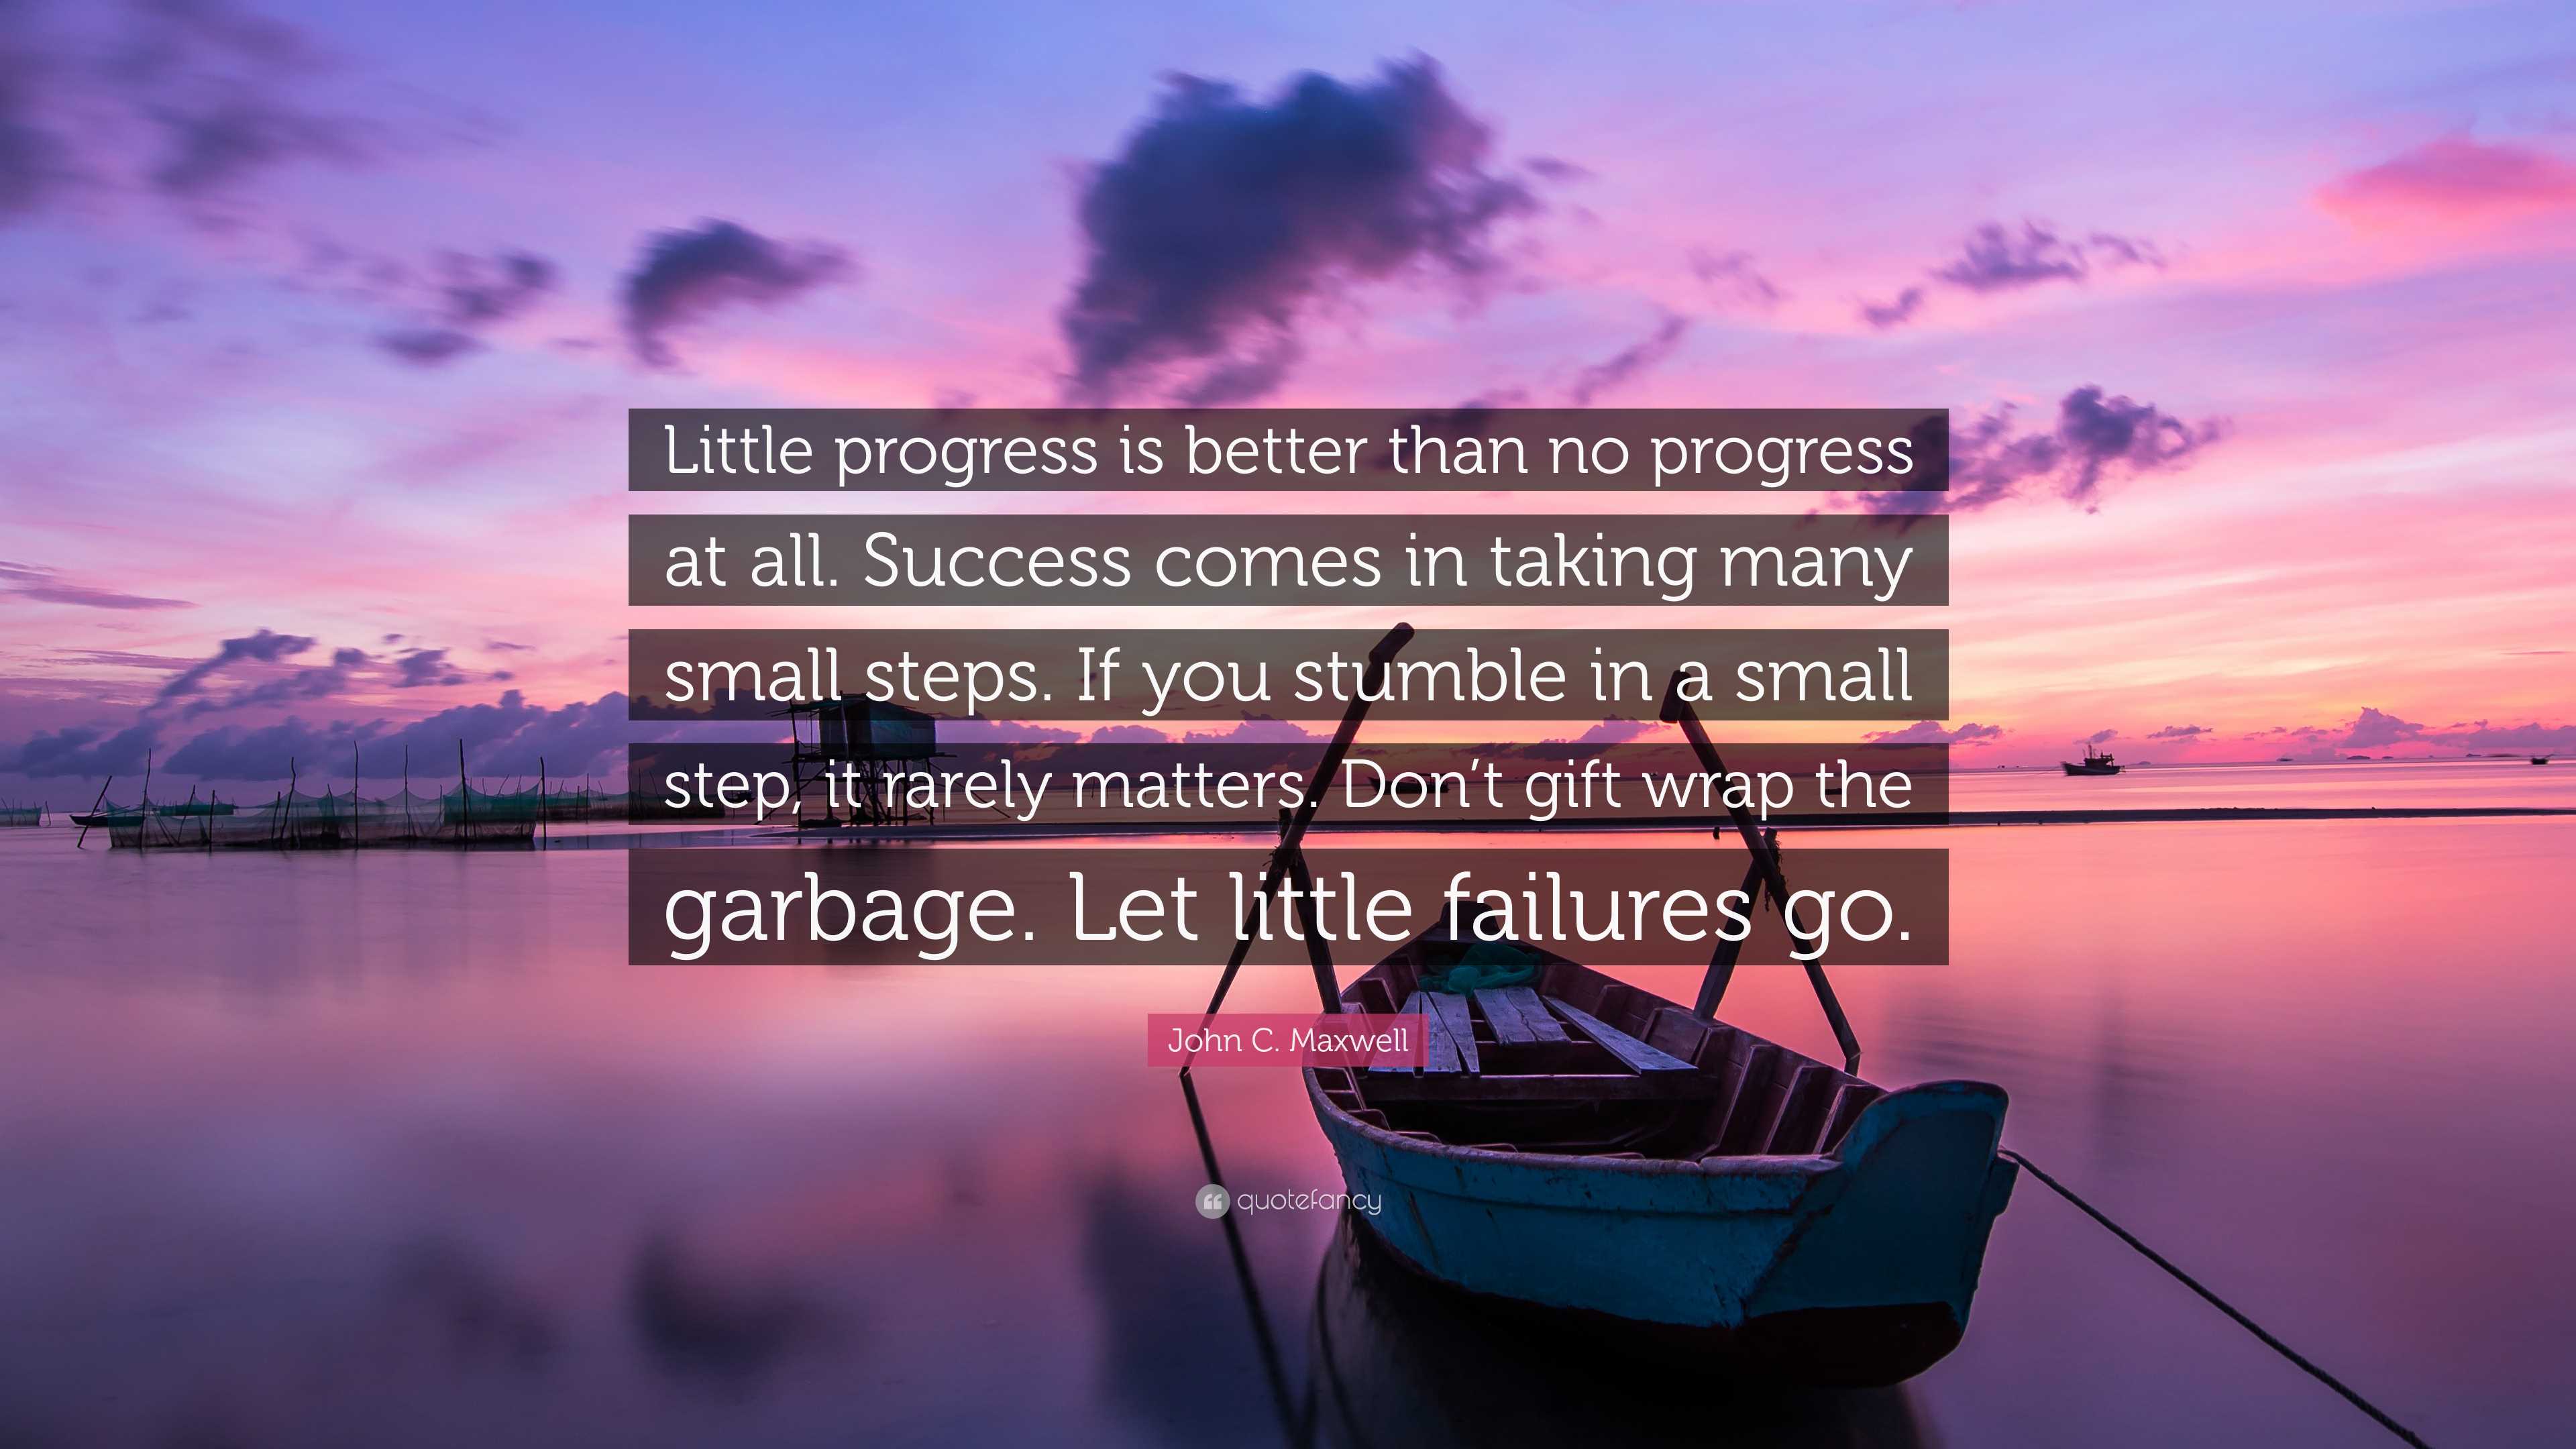 John C. Maxwell Quote: “Little progress is better than no progress at ...